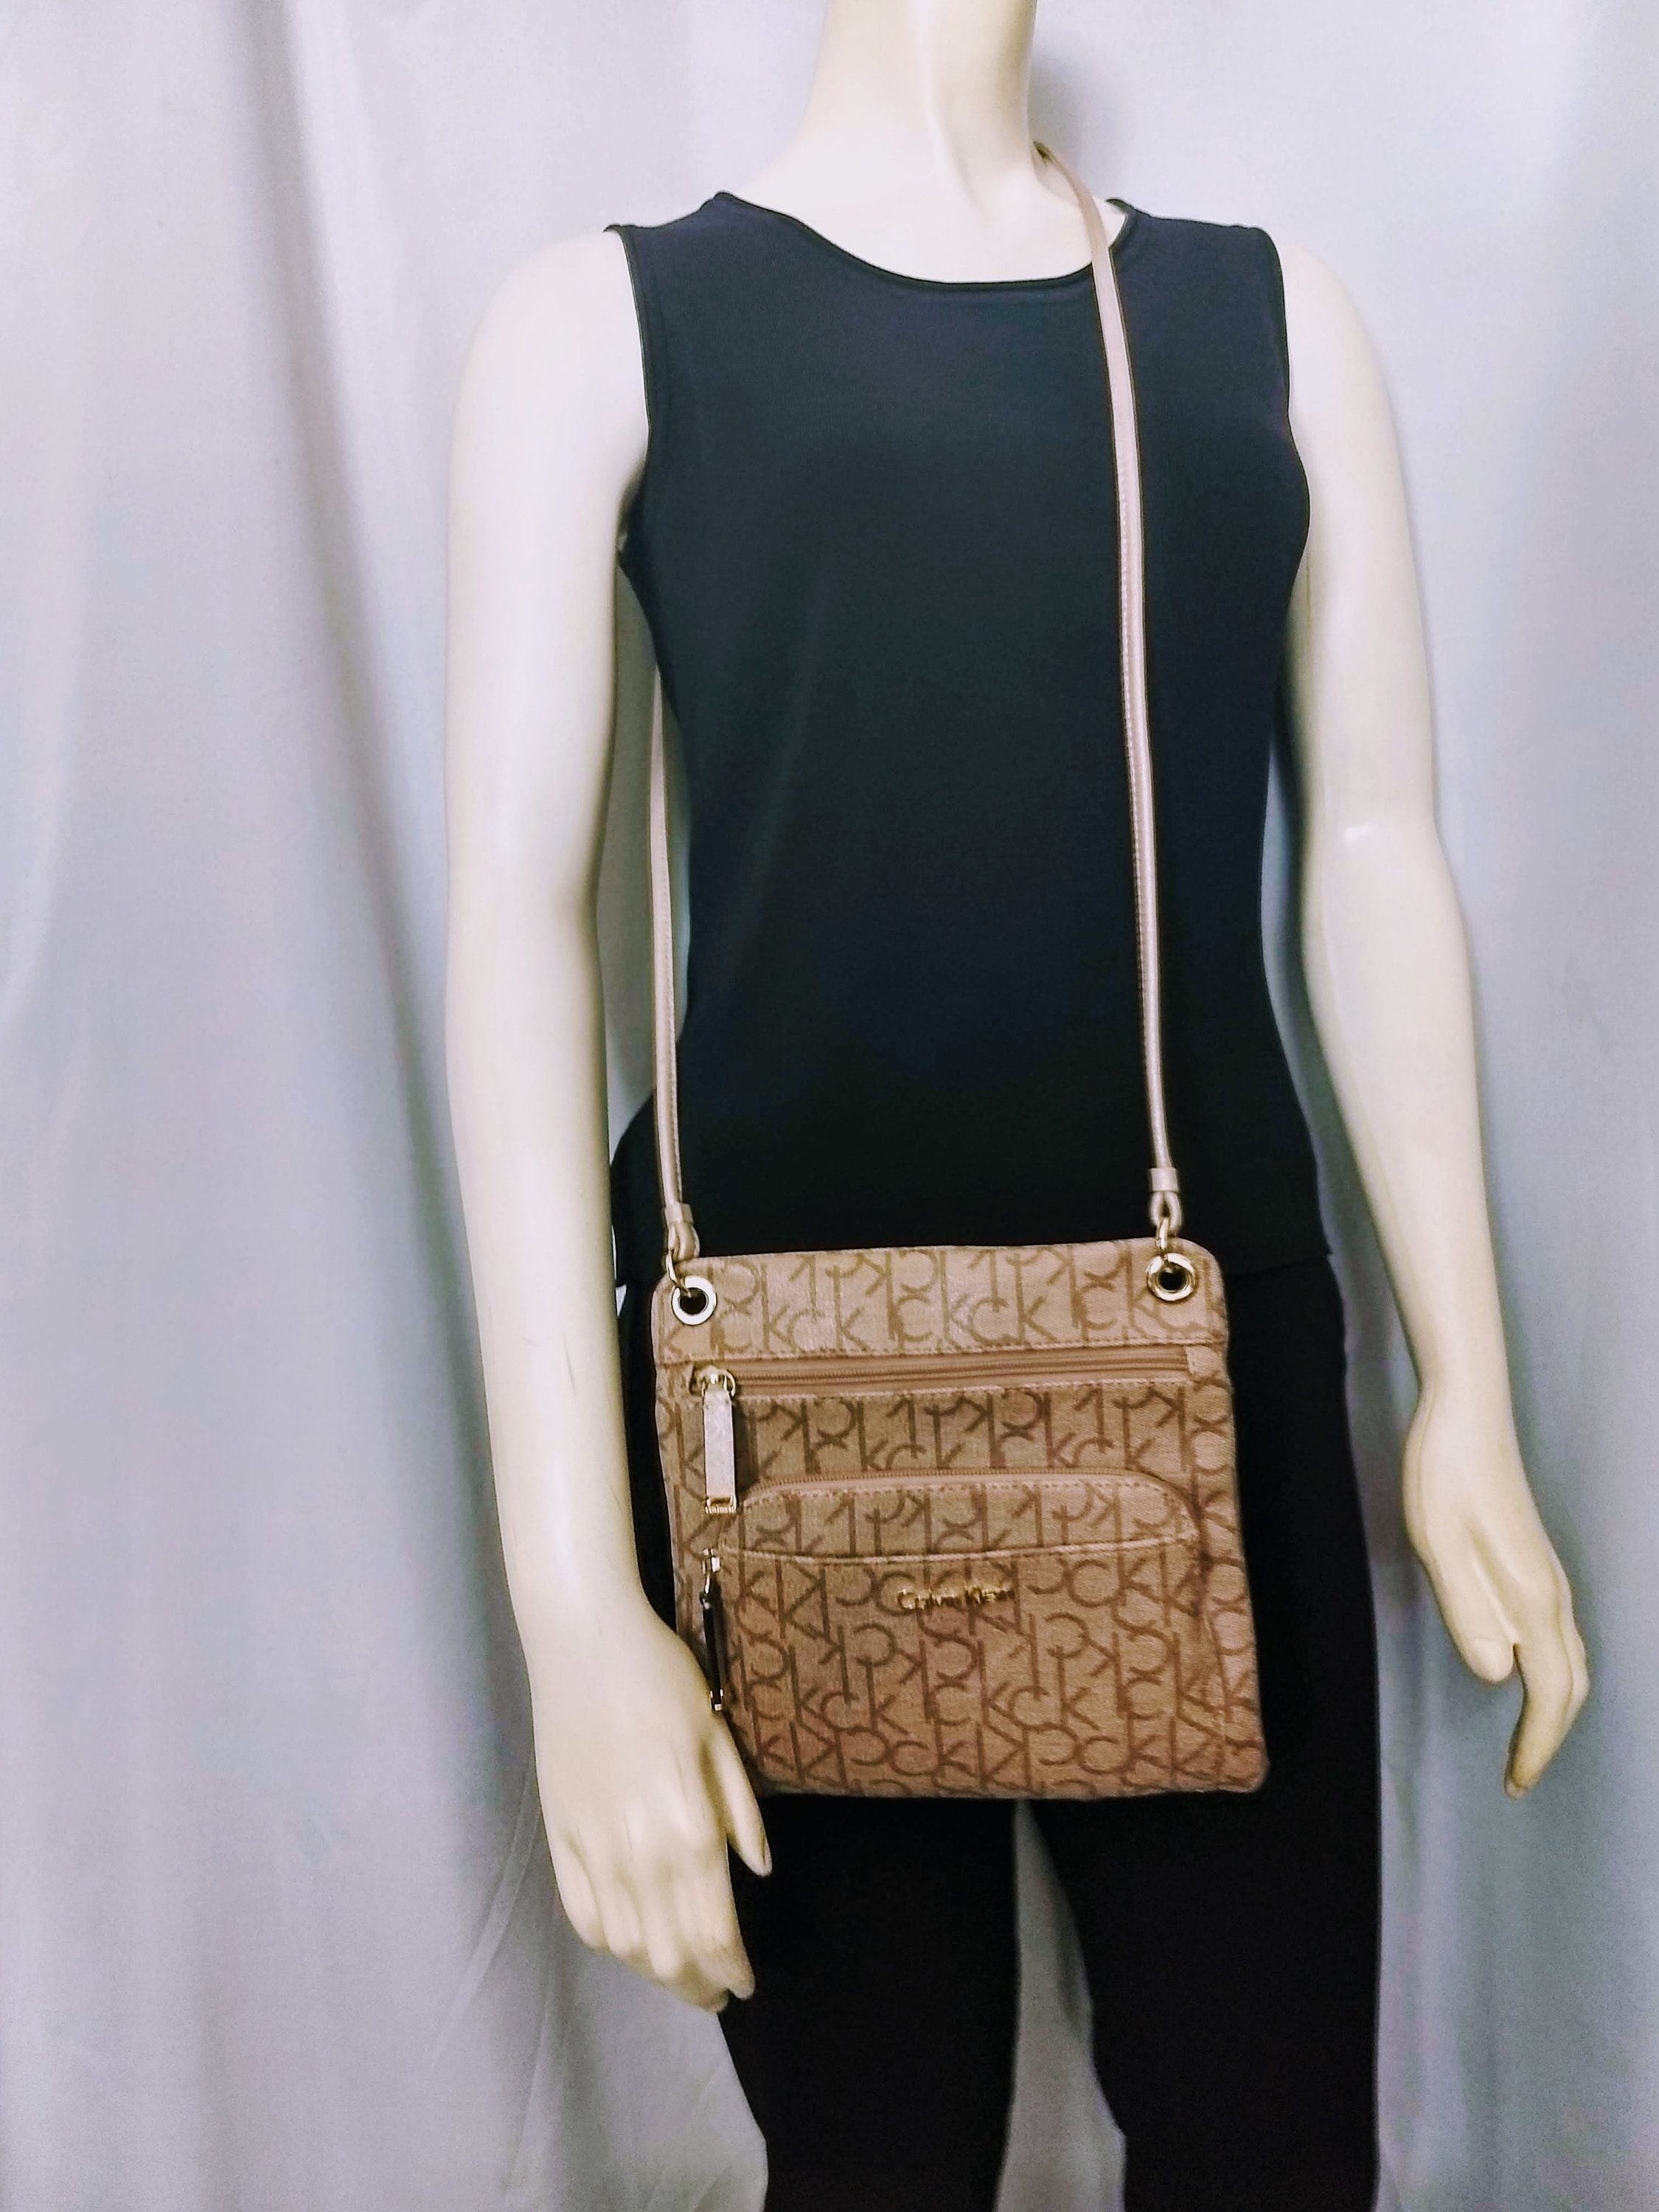 calvin klein crossbody handbag for women CREAM / Beige color